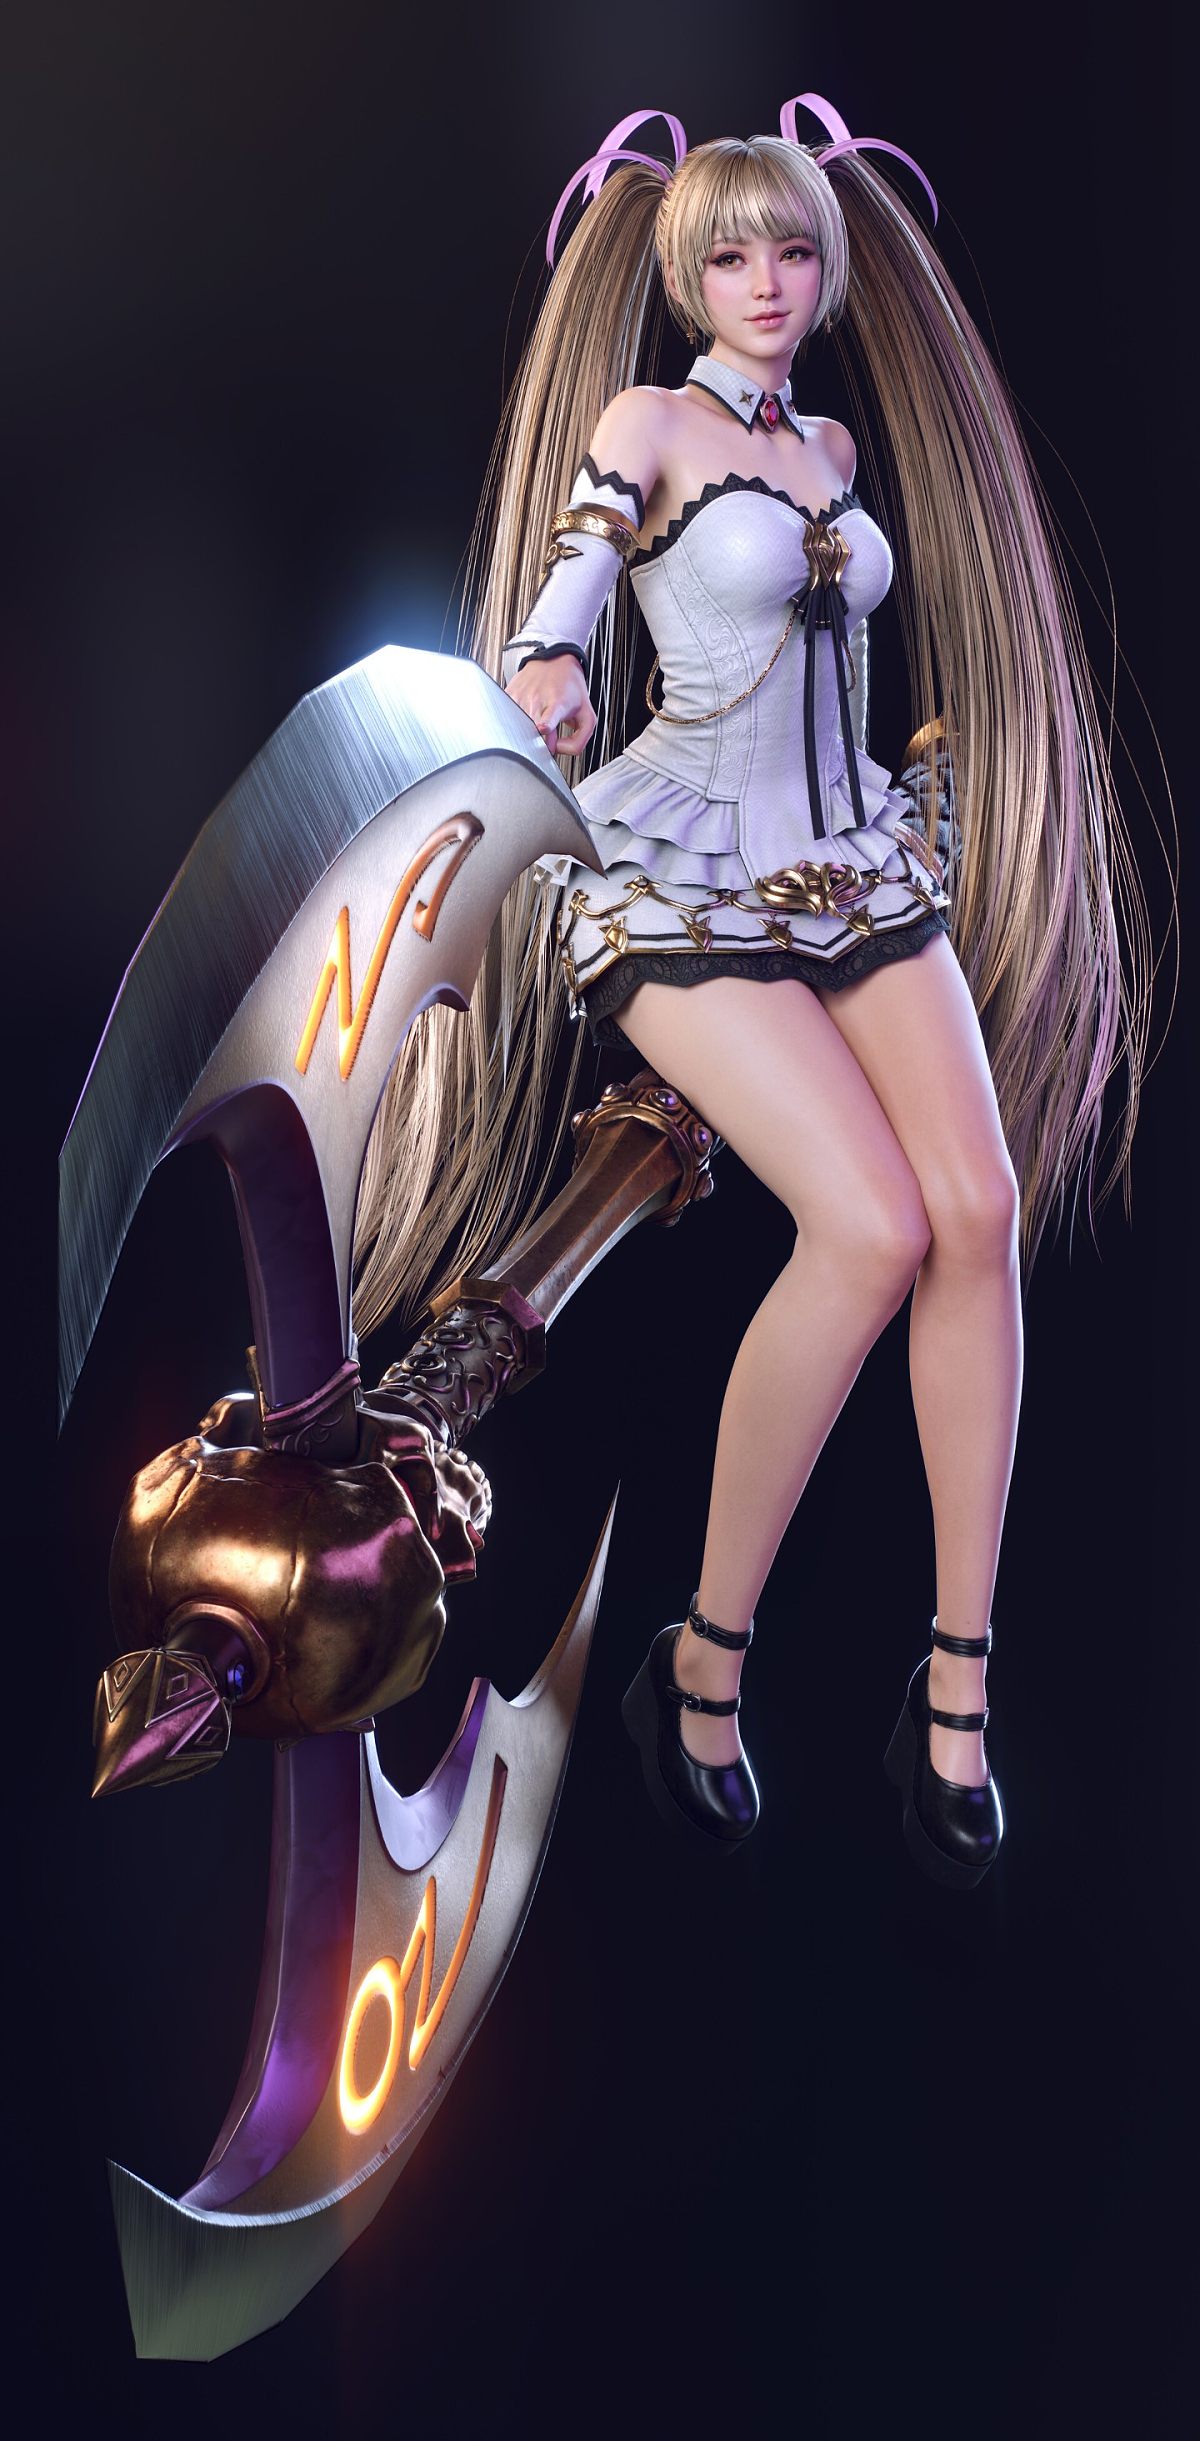 General 1200x2441 blonde fantasy art fantasy girl CGI simple background women